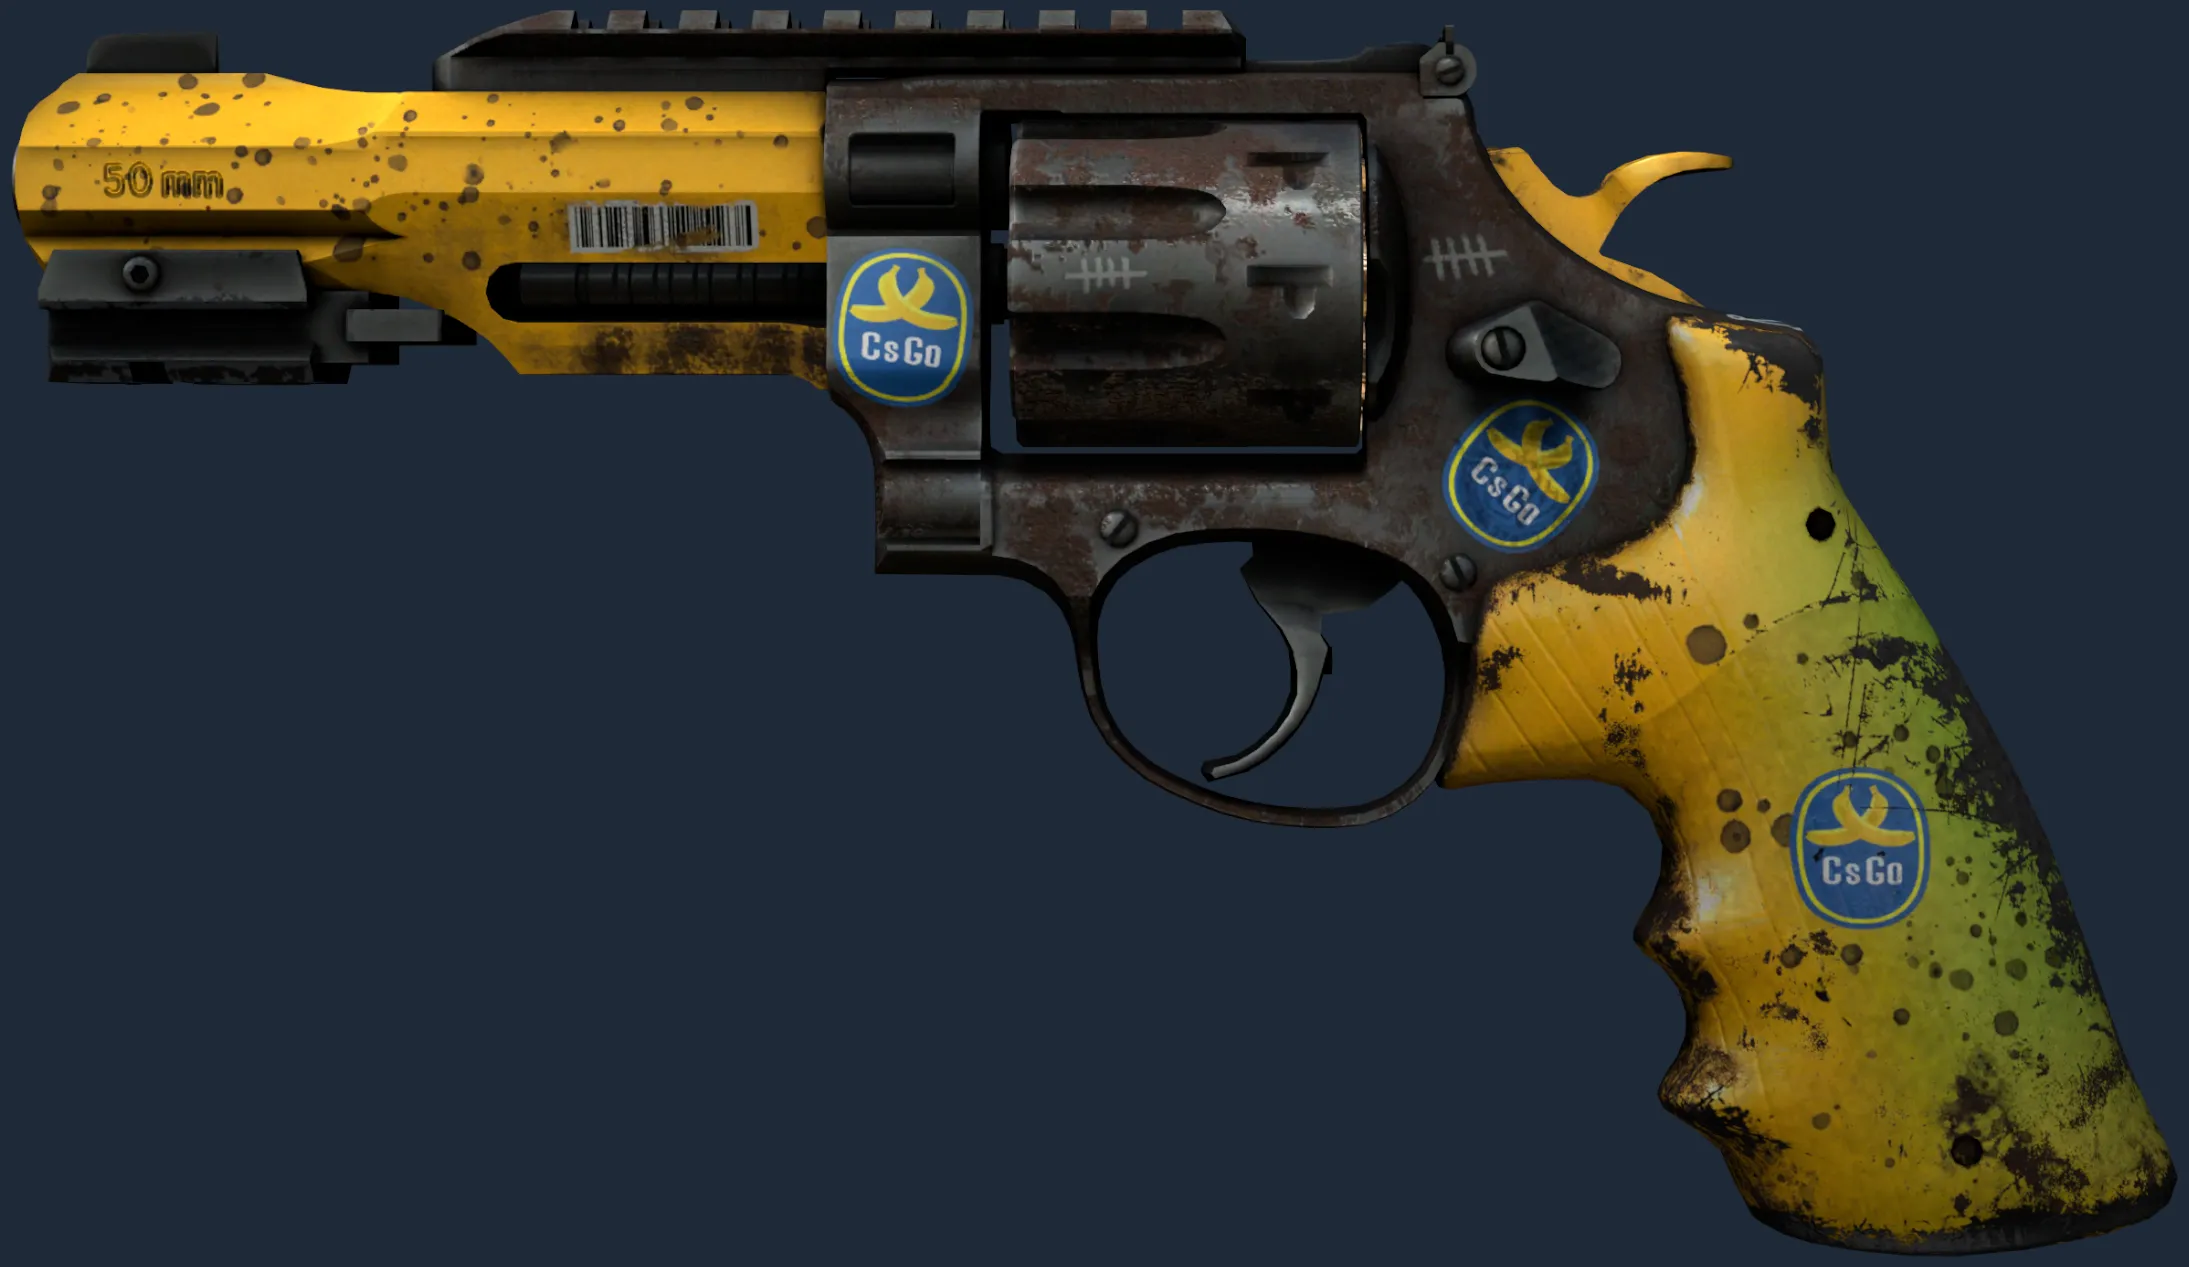 R8 Revolver | Banana Cannon (Field-Tested)